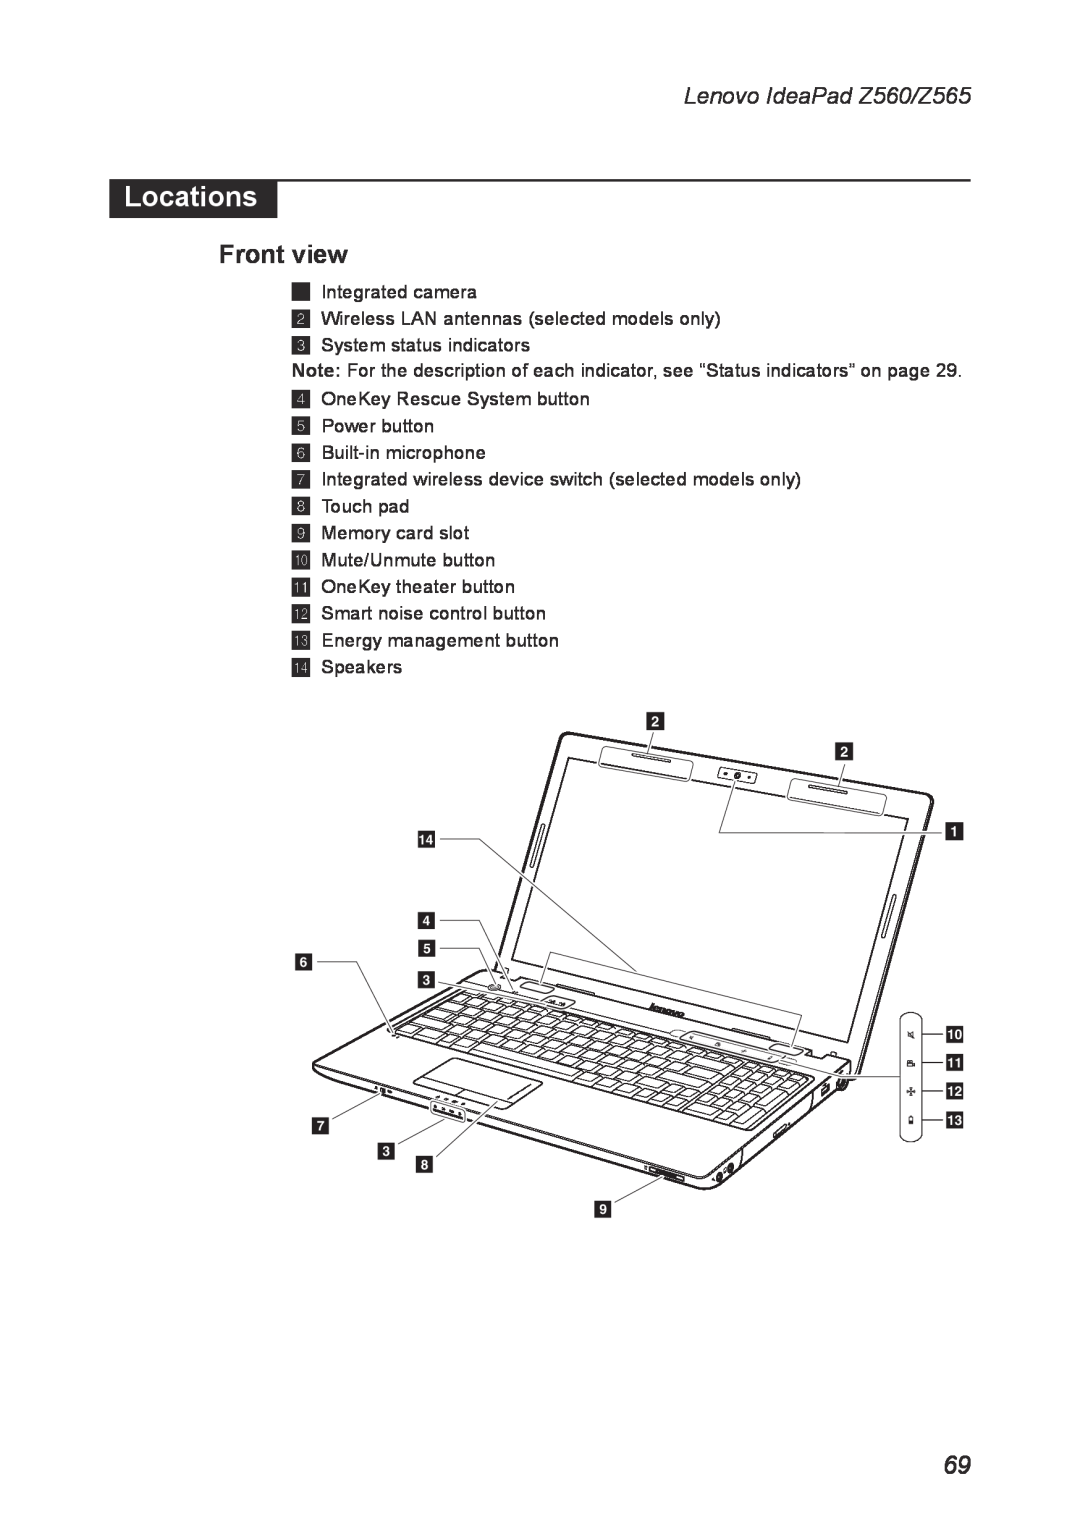 Lenovo manual Locations, Front view, Lenovo IdeaPad Z560/Z565 